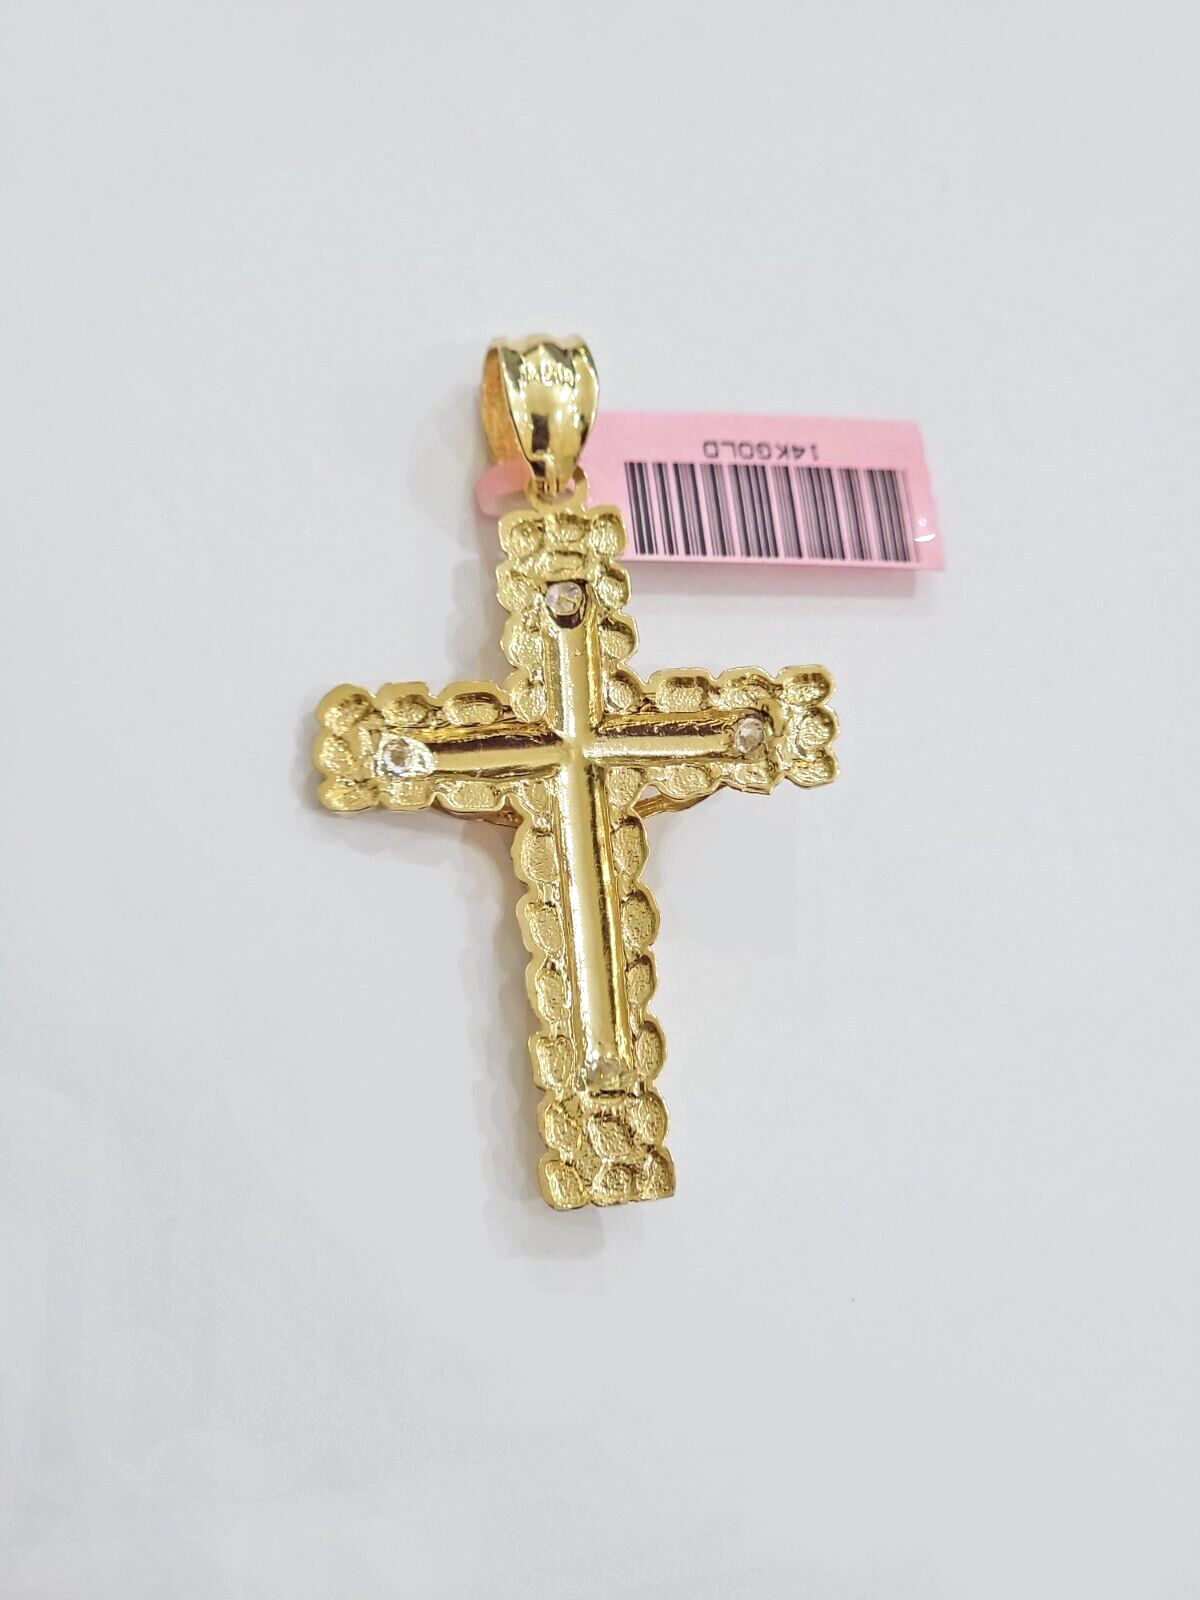 14k Yellow Gold Cross Nugget Pendant Jesus Crucifix 2 Inch 14kt Charm Men's REAL